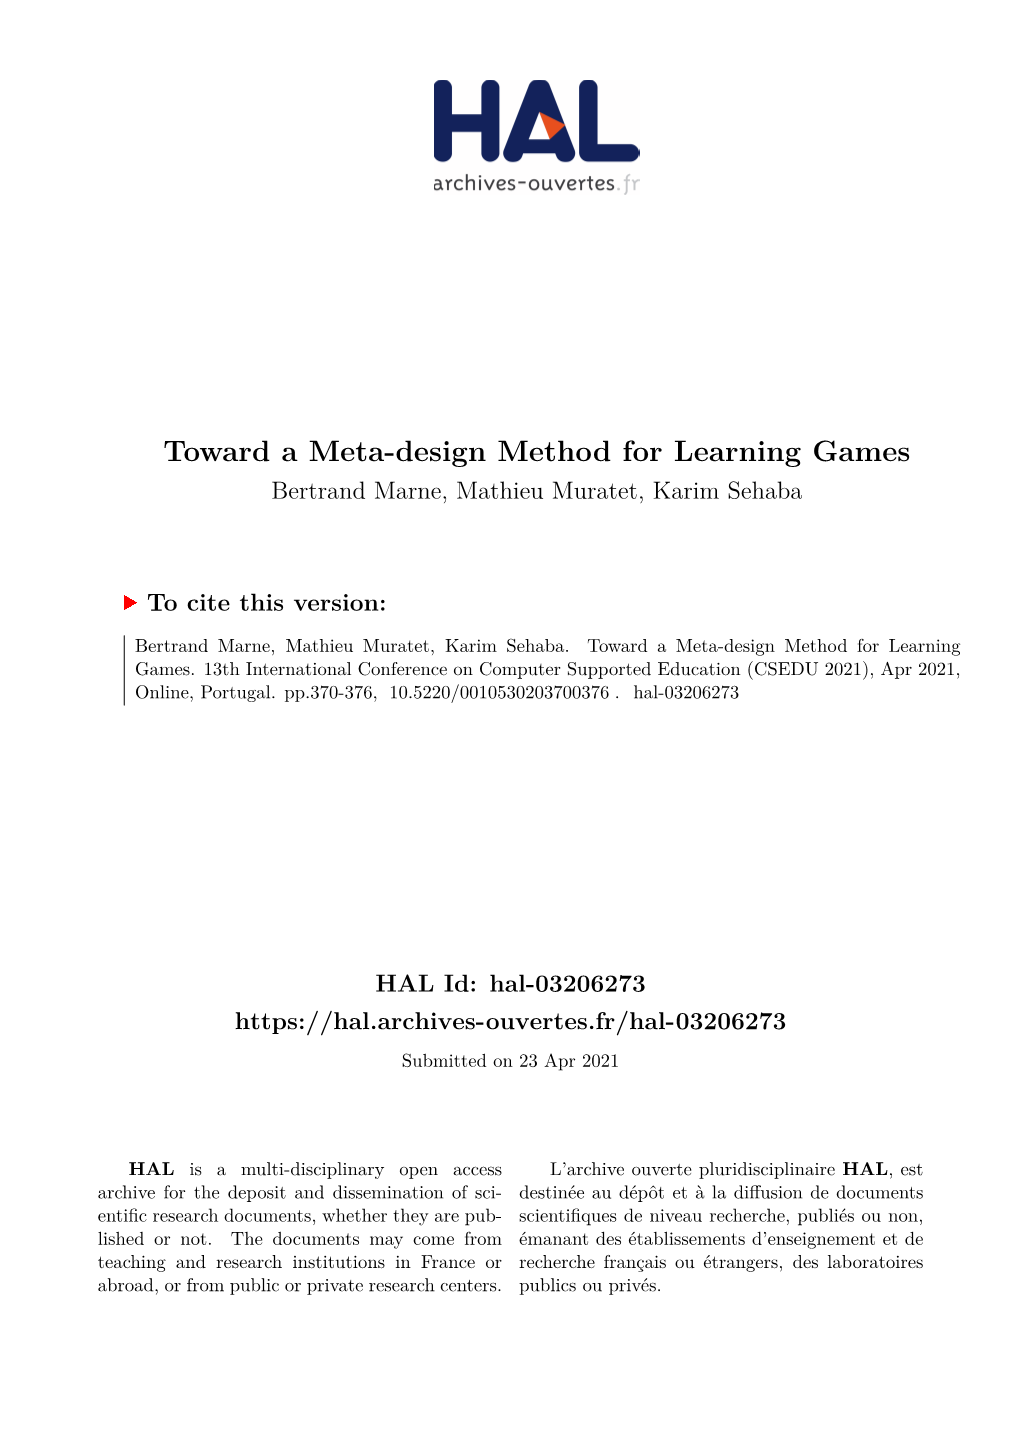 Toward a Meta-Design Method for Learning Games Bertrand Marne, Mathieu Muratet, Karim Sehaba